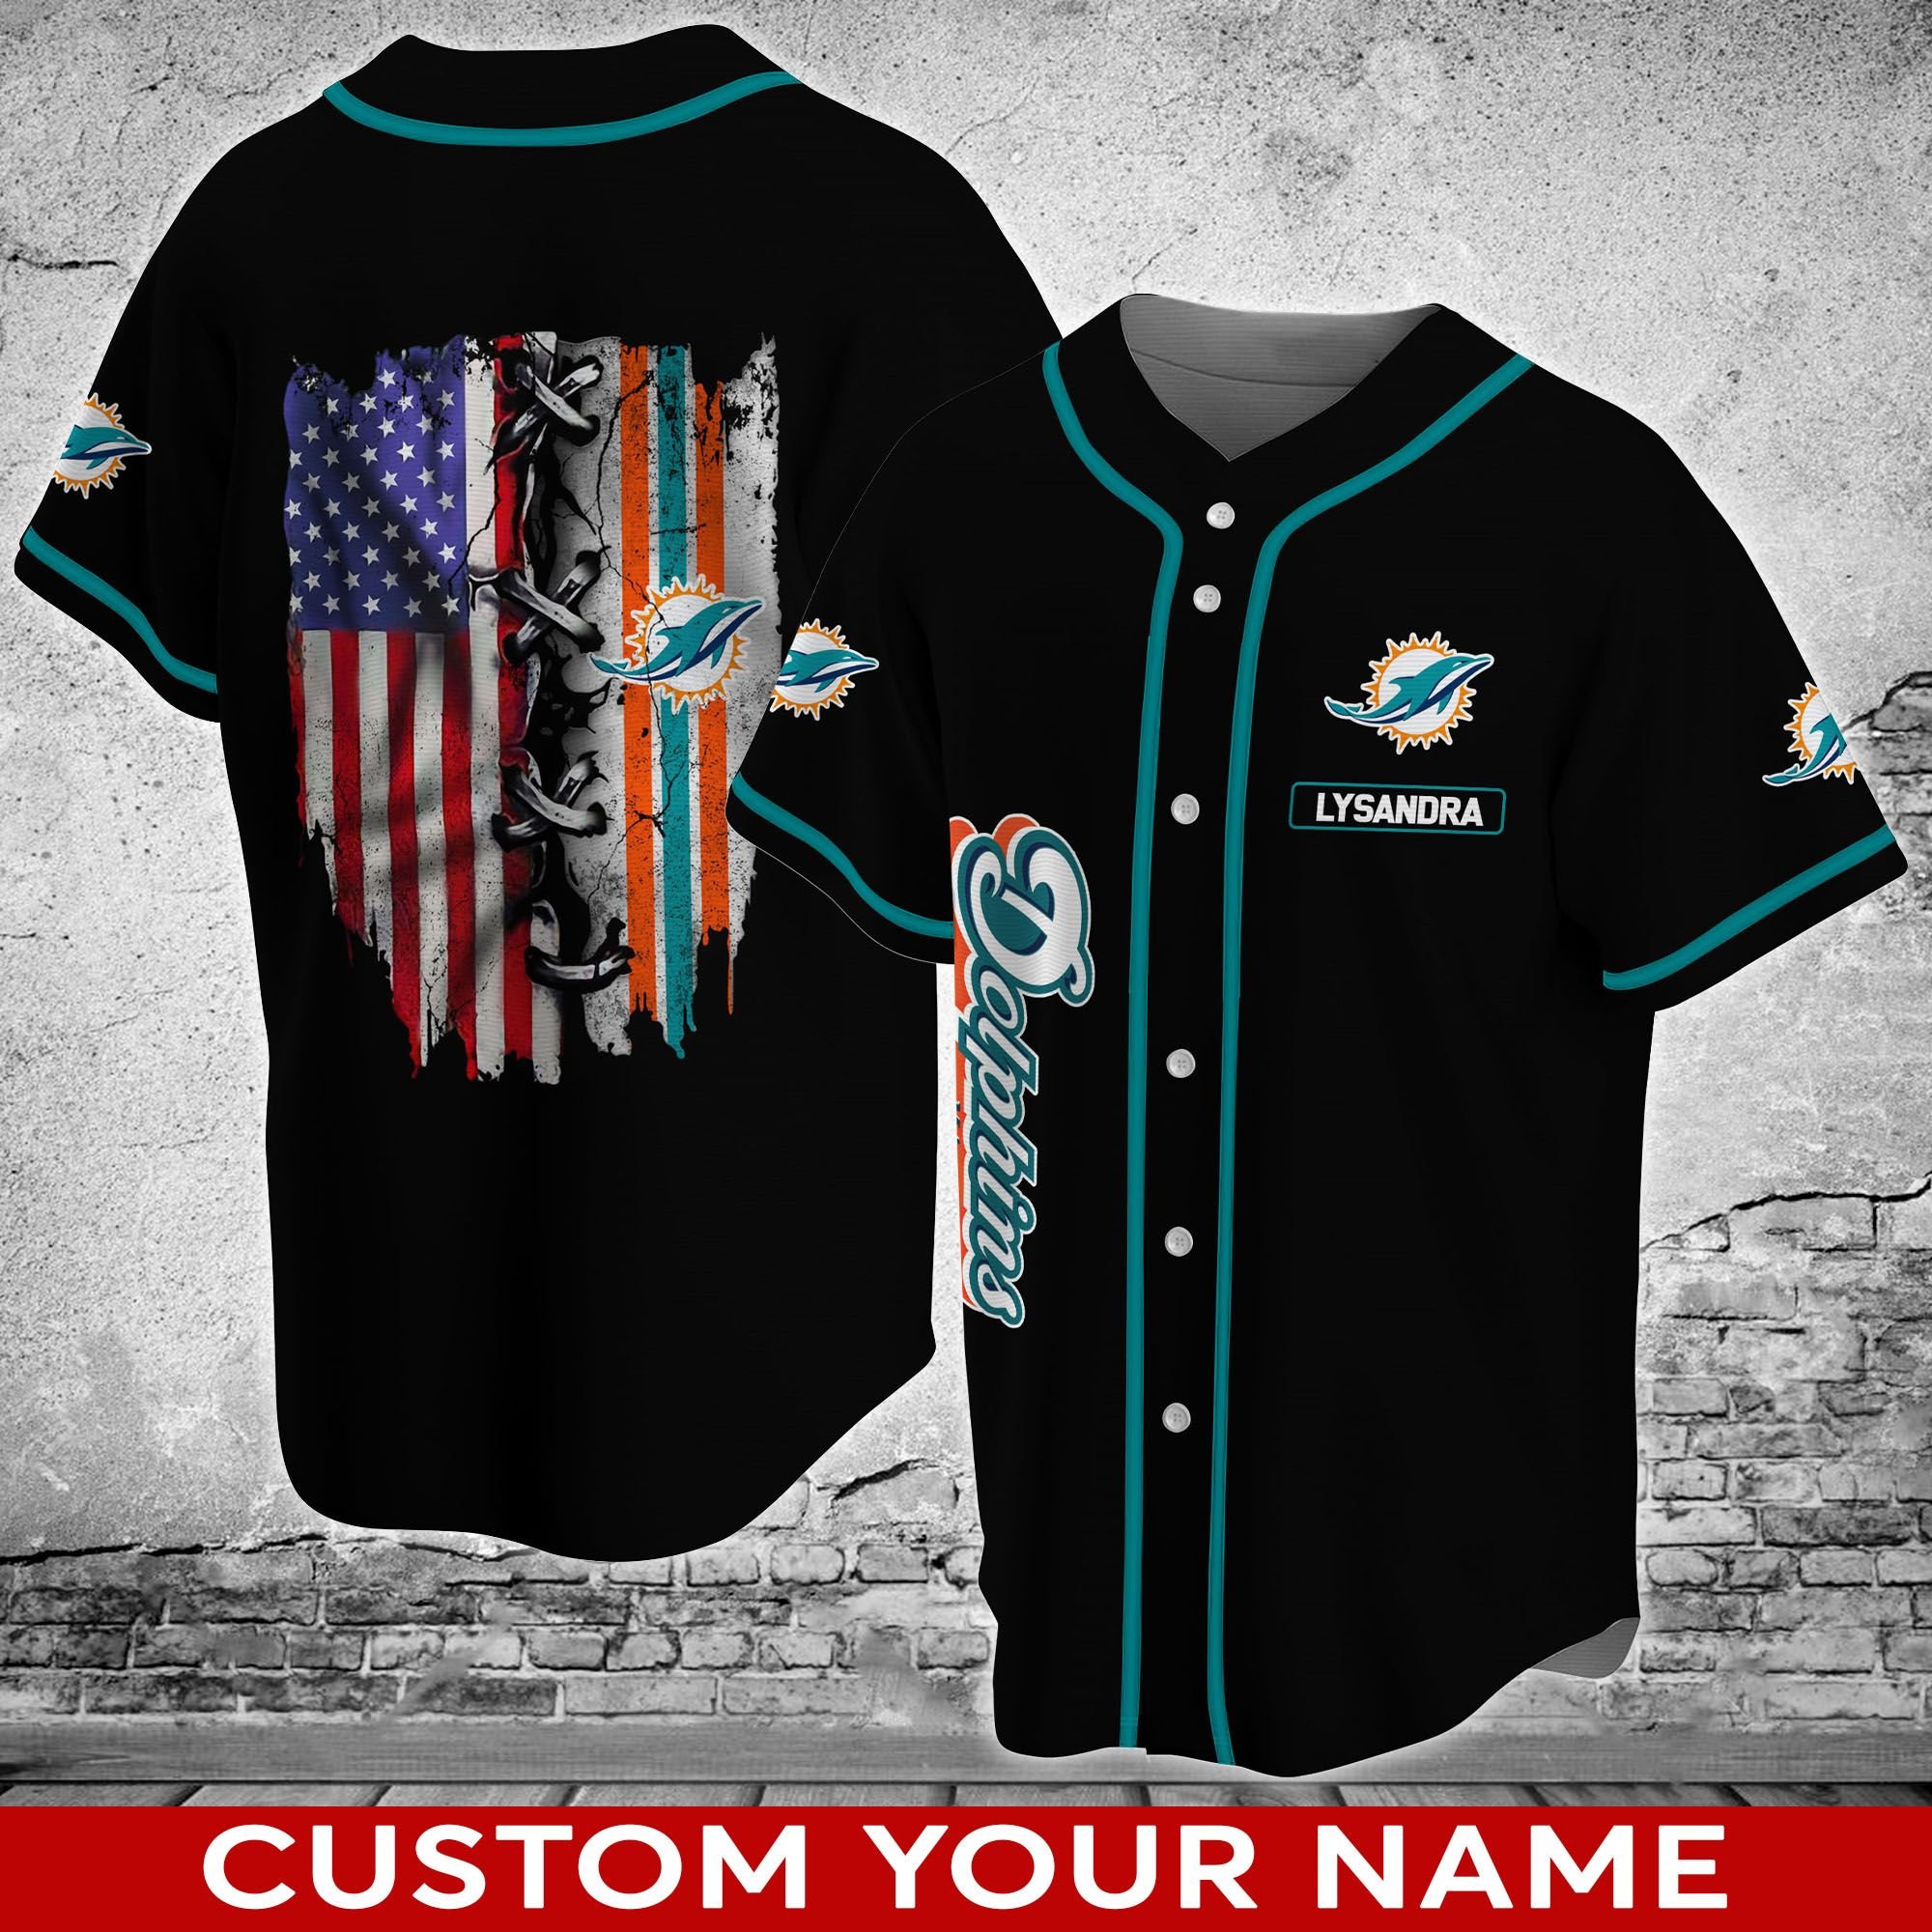 Miami Dolphins Shop - Miami Dolphins NFL Baseball Jersey Shirt 1